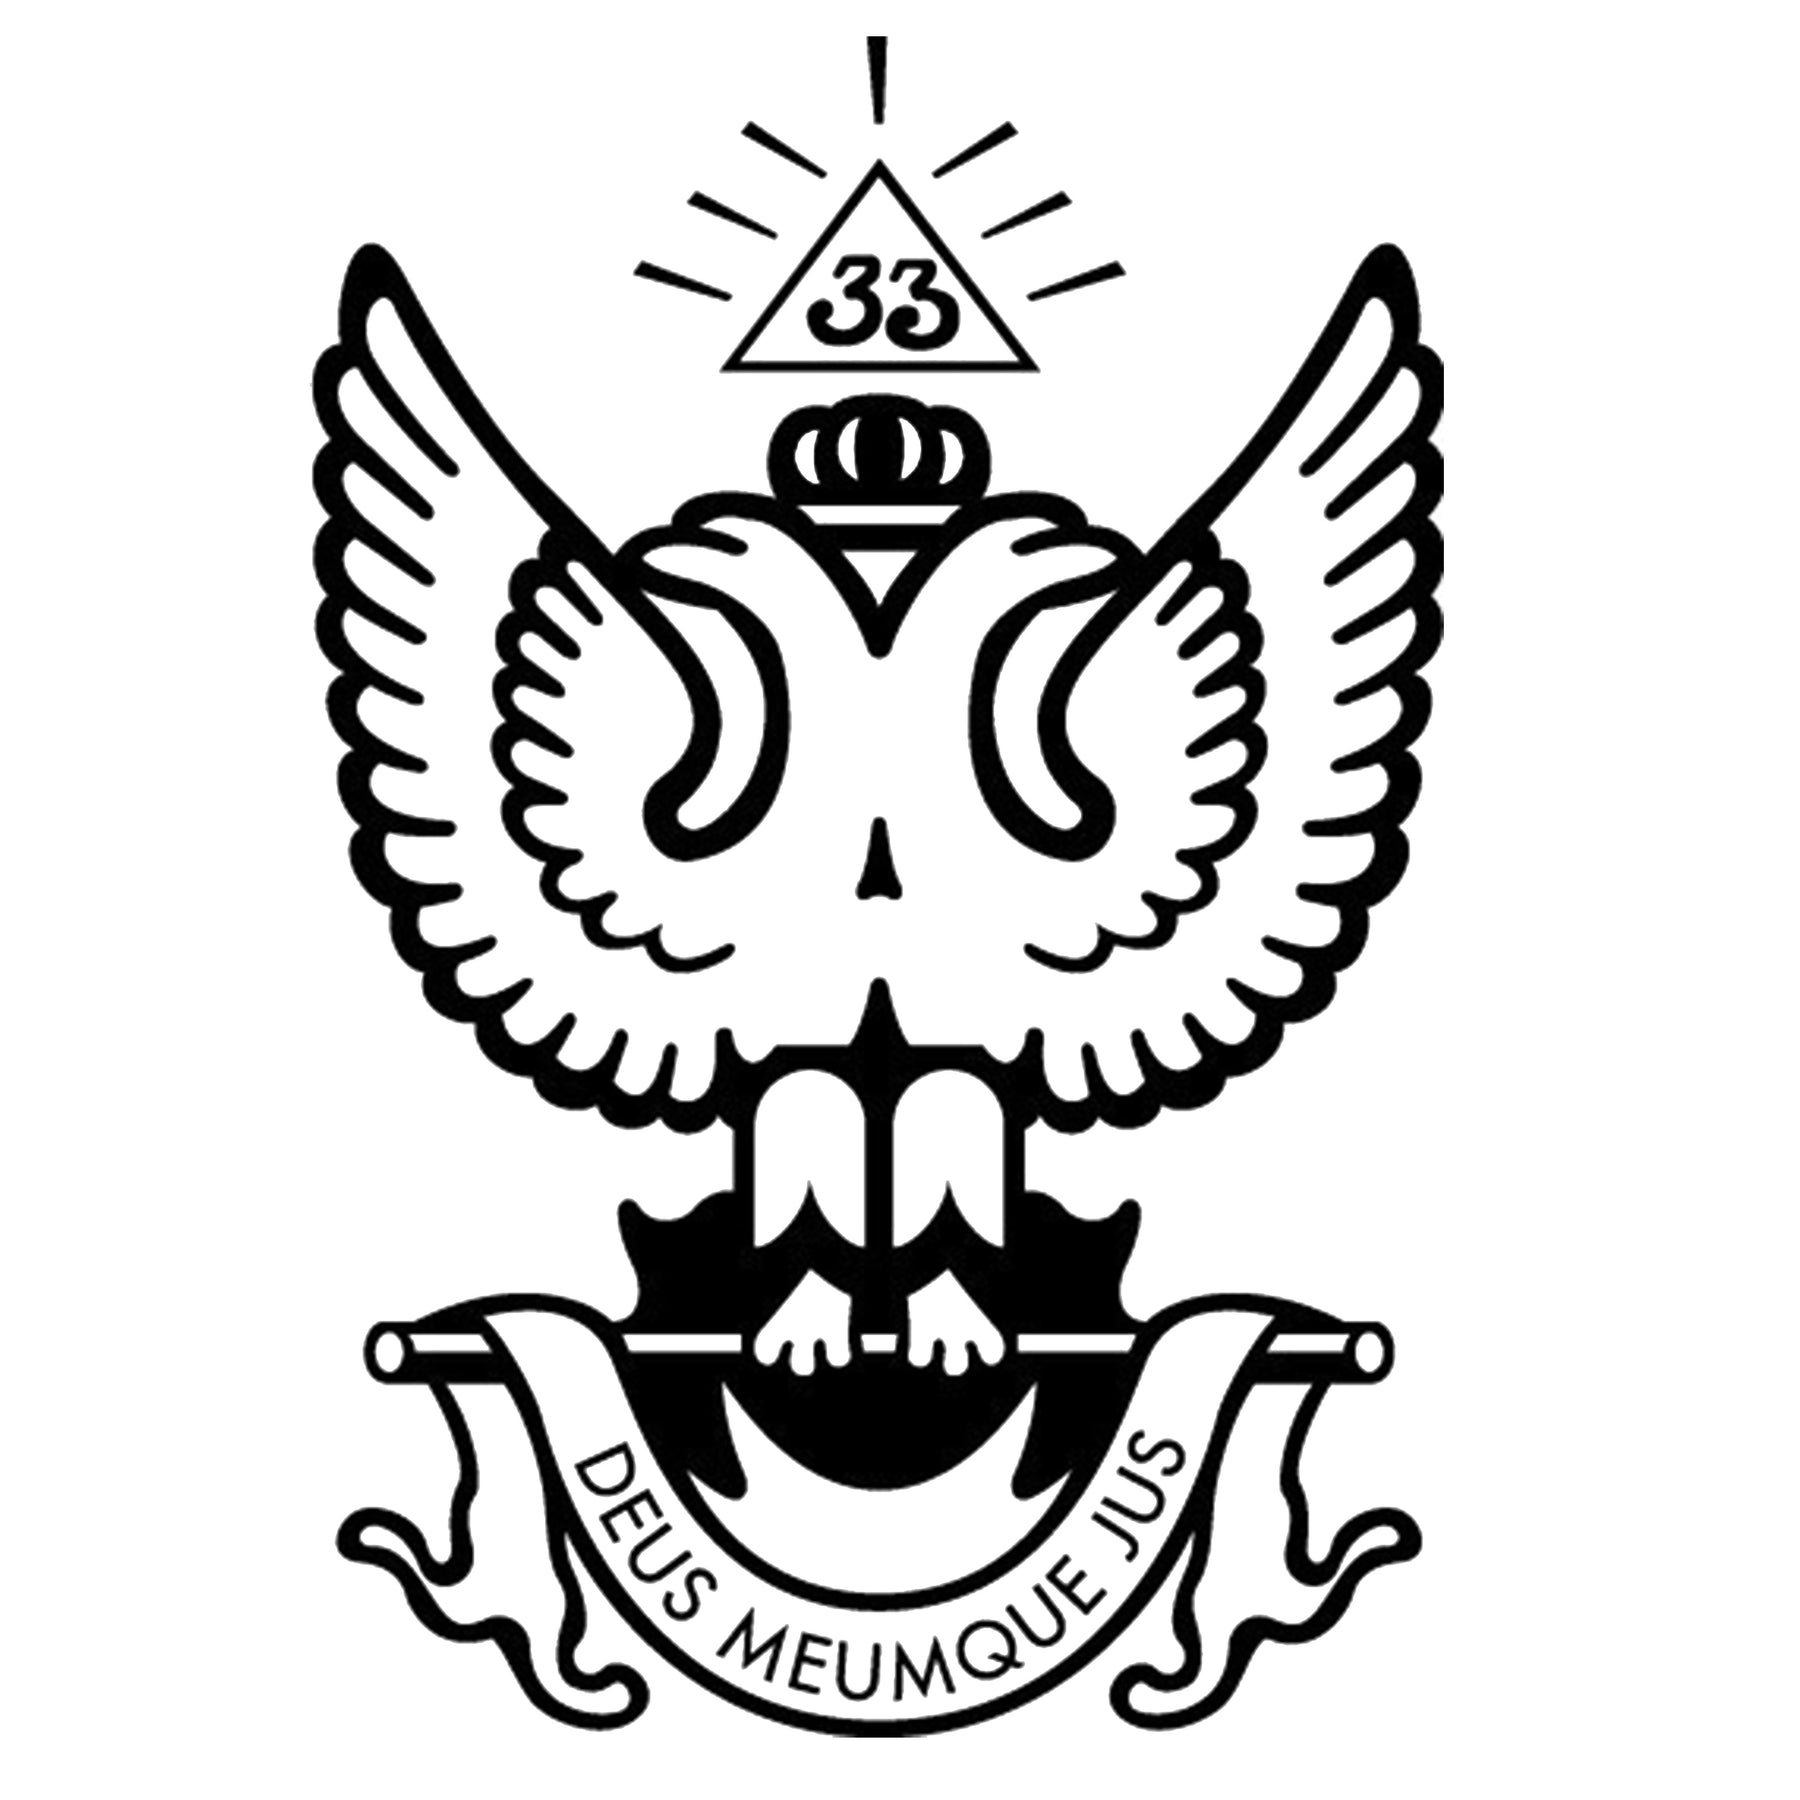 33rd Degree Scottish Rite Business Card Holder - Wings Up Leather - Bricks Masons